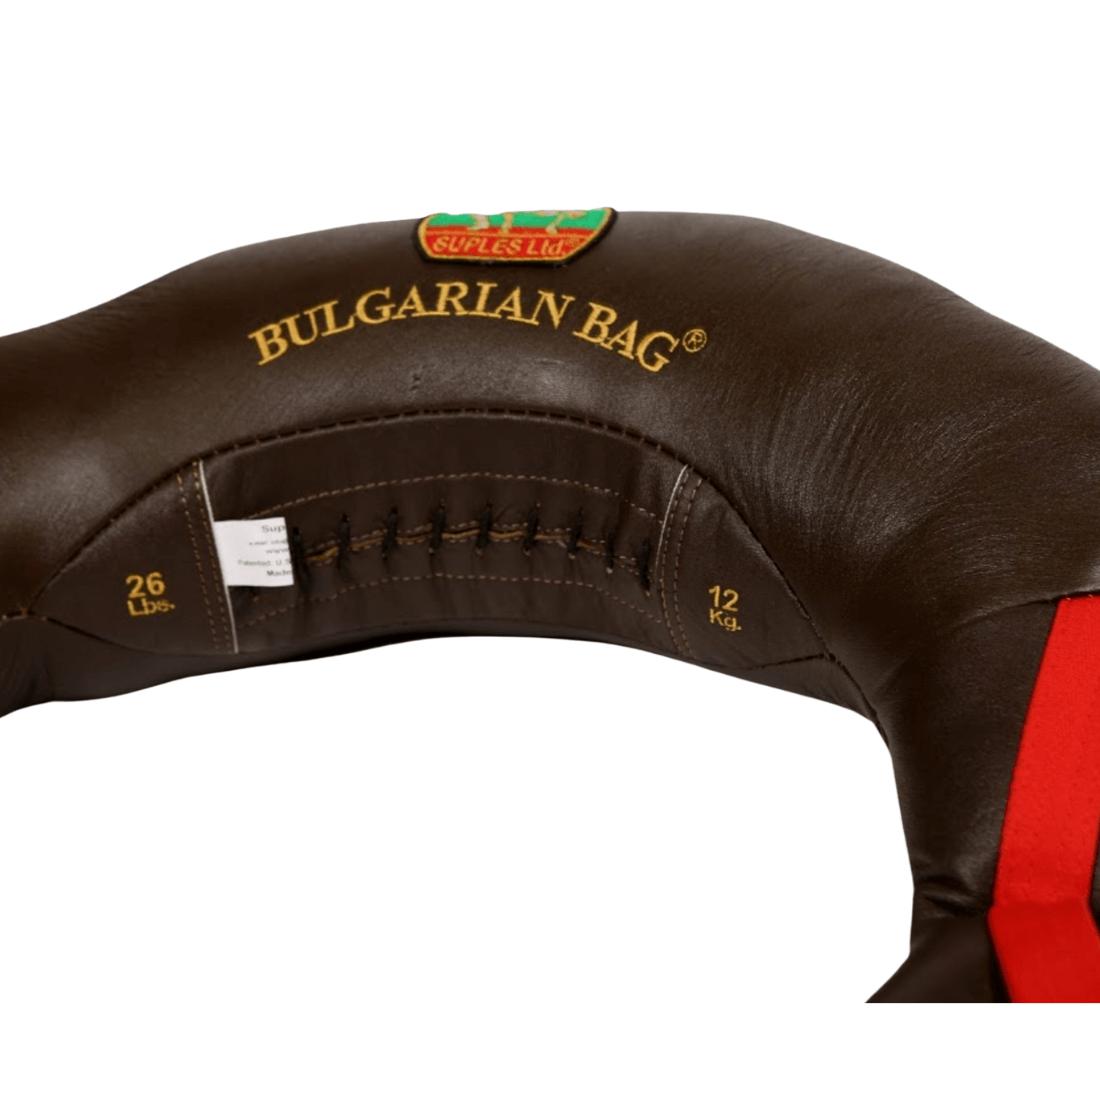 Bulgarian Bag Suples Original - Genuine Leather Size M Neck Contour